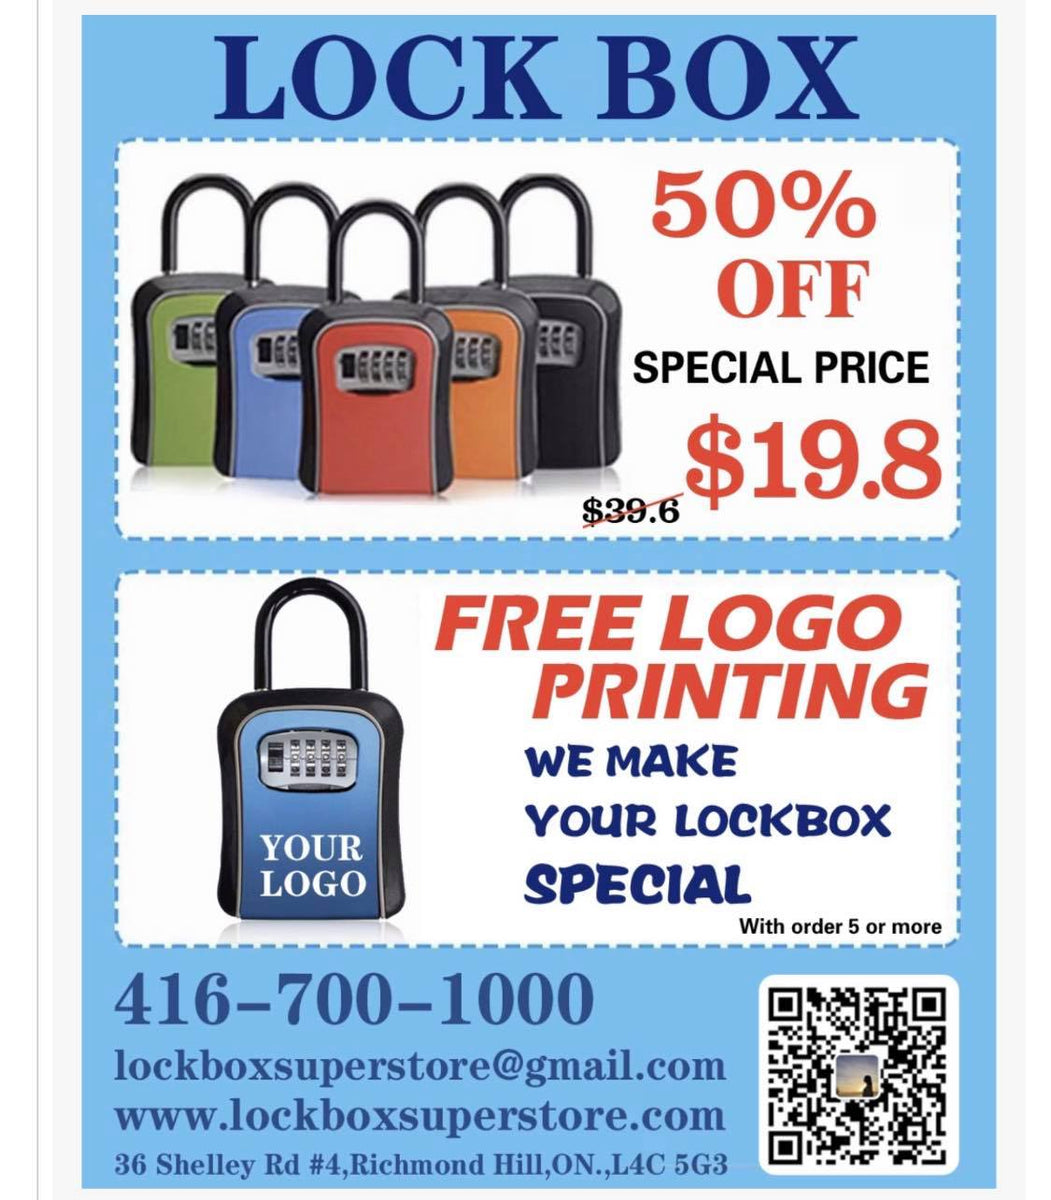 www.lockboxsuperstore.com